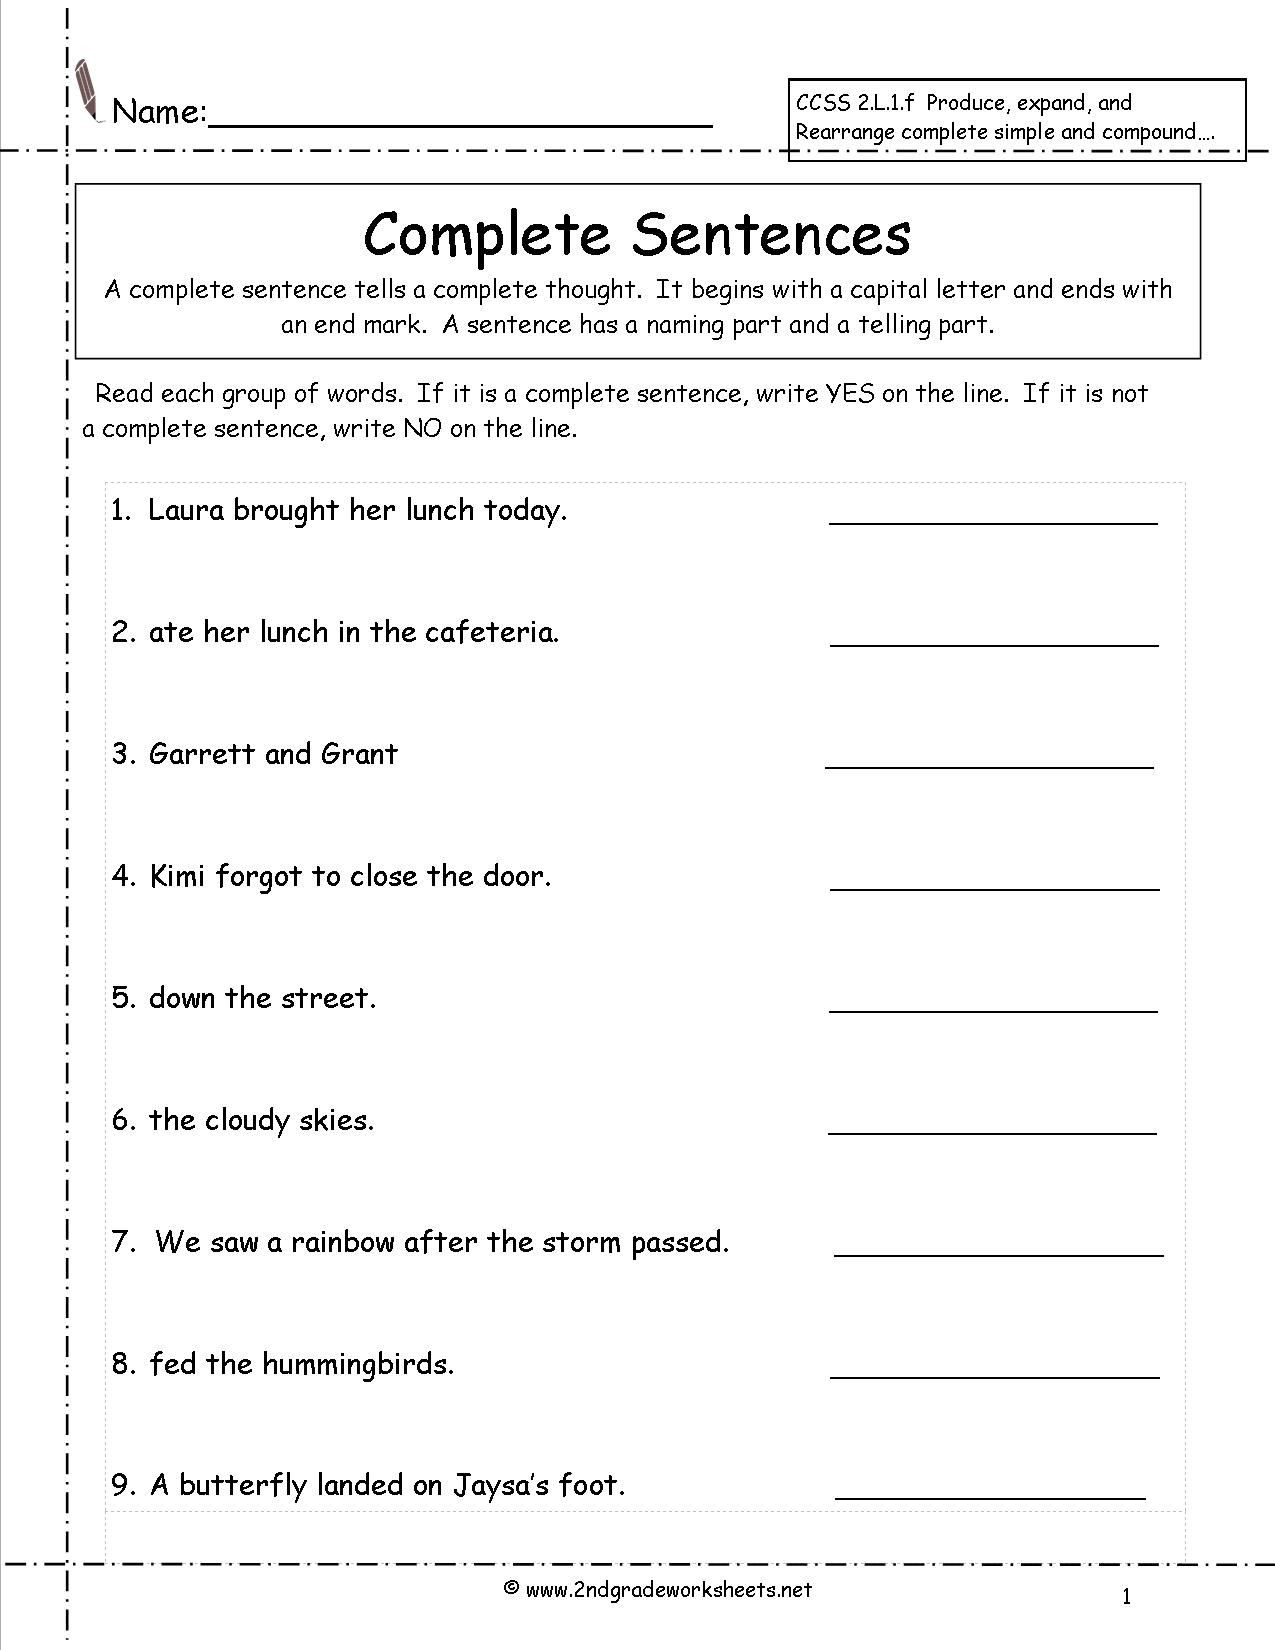 Complete Sentences Worksheet 4th Grade Second Grade Sentences Worksheets Ccss 2 L 1 F Worksheets